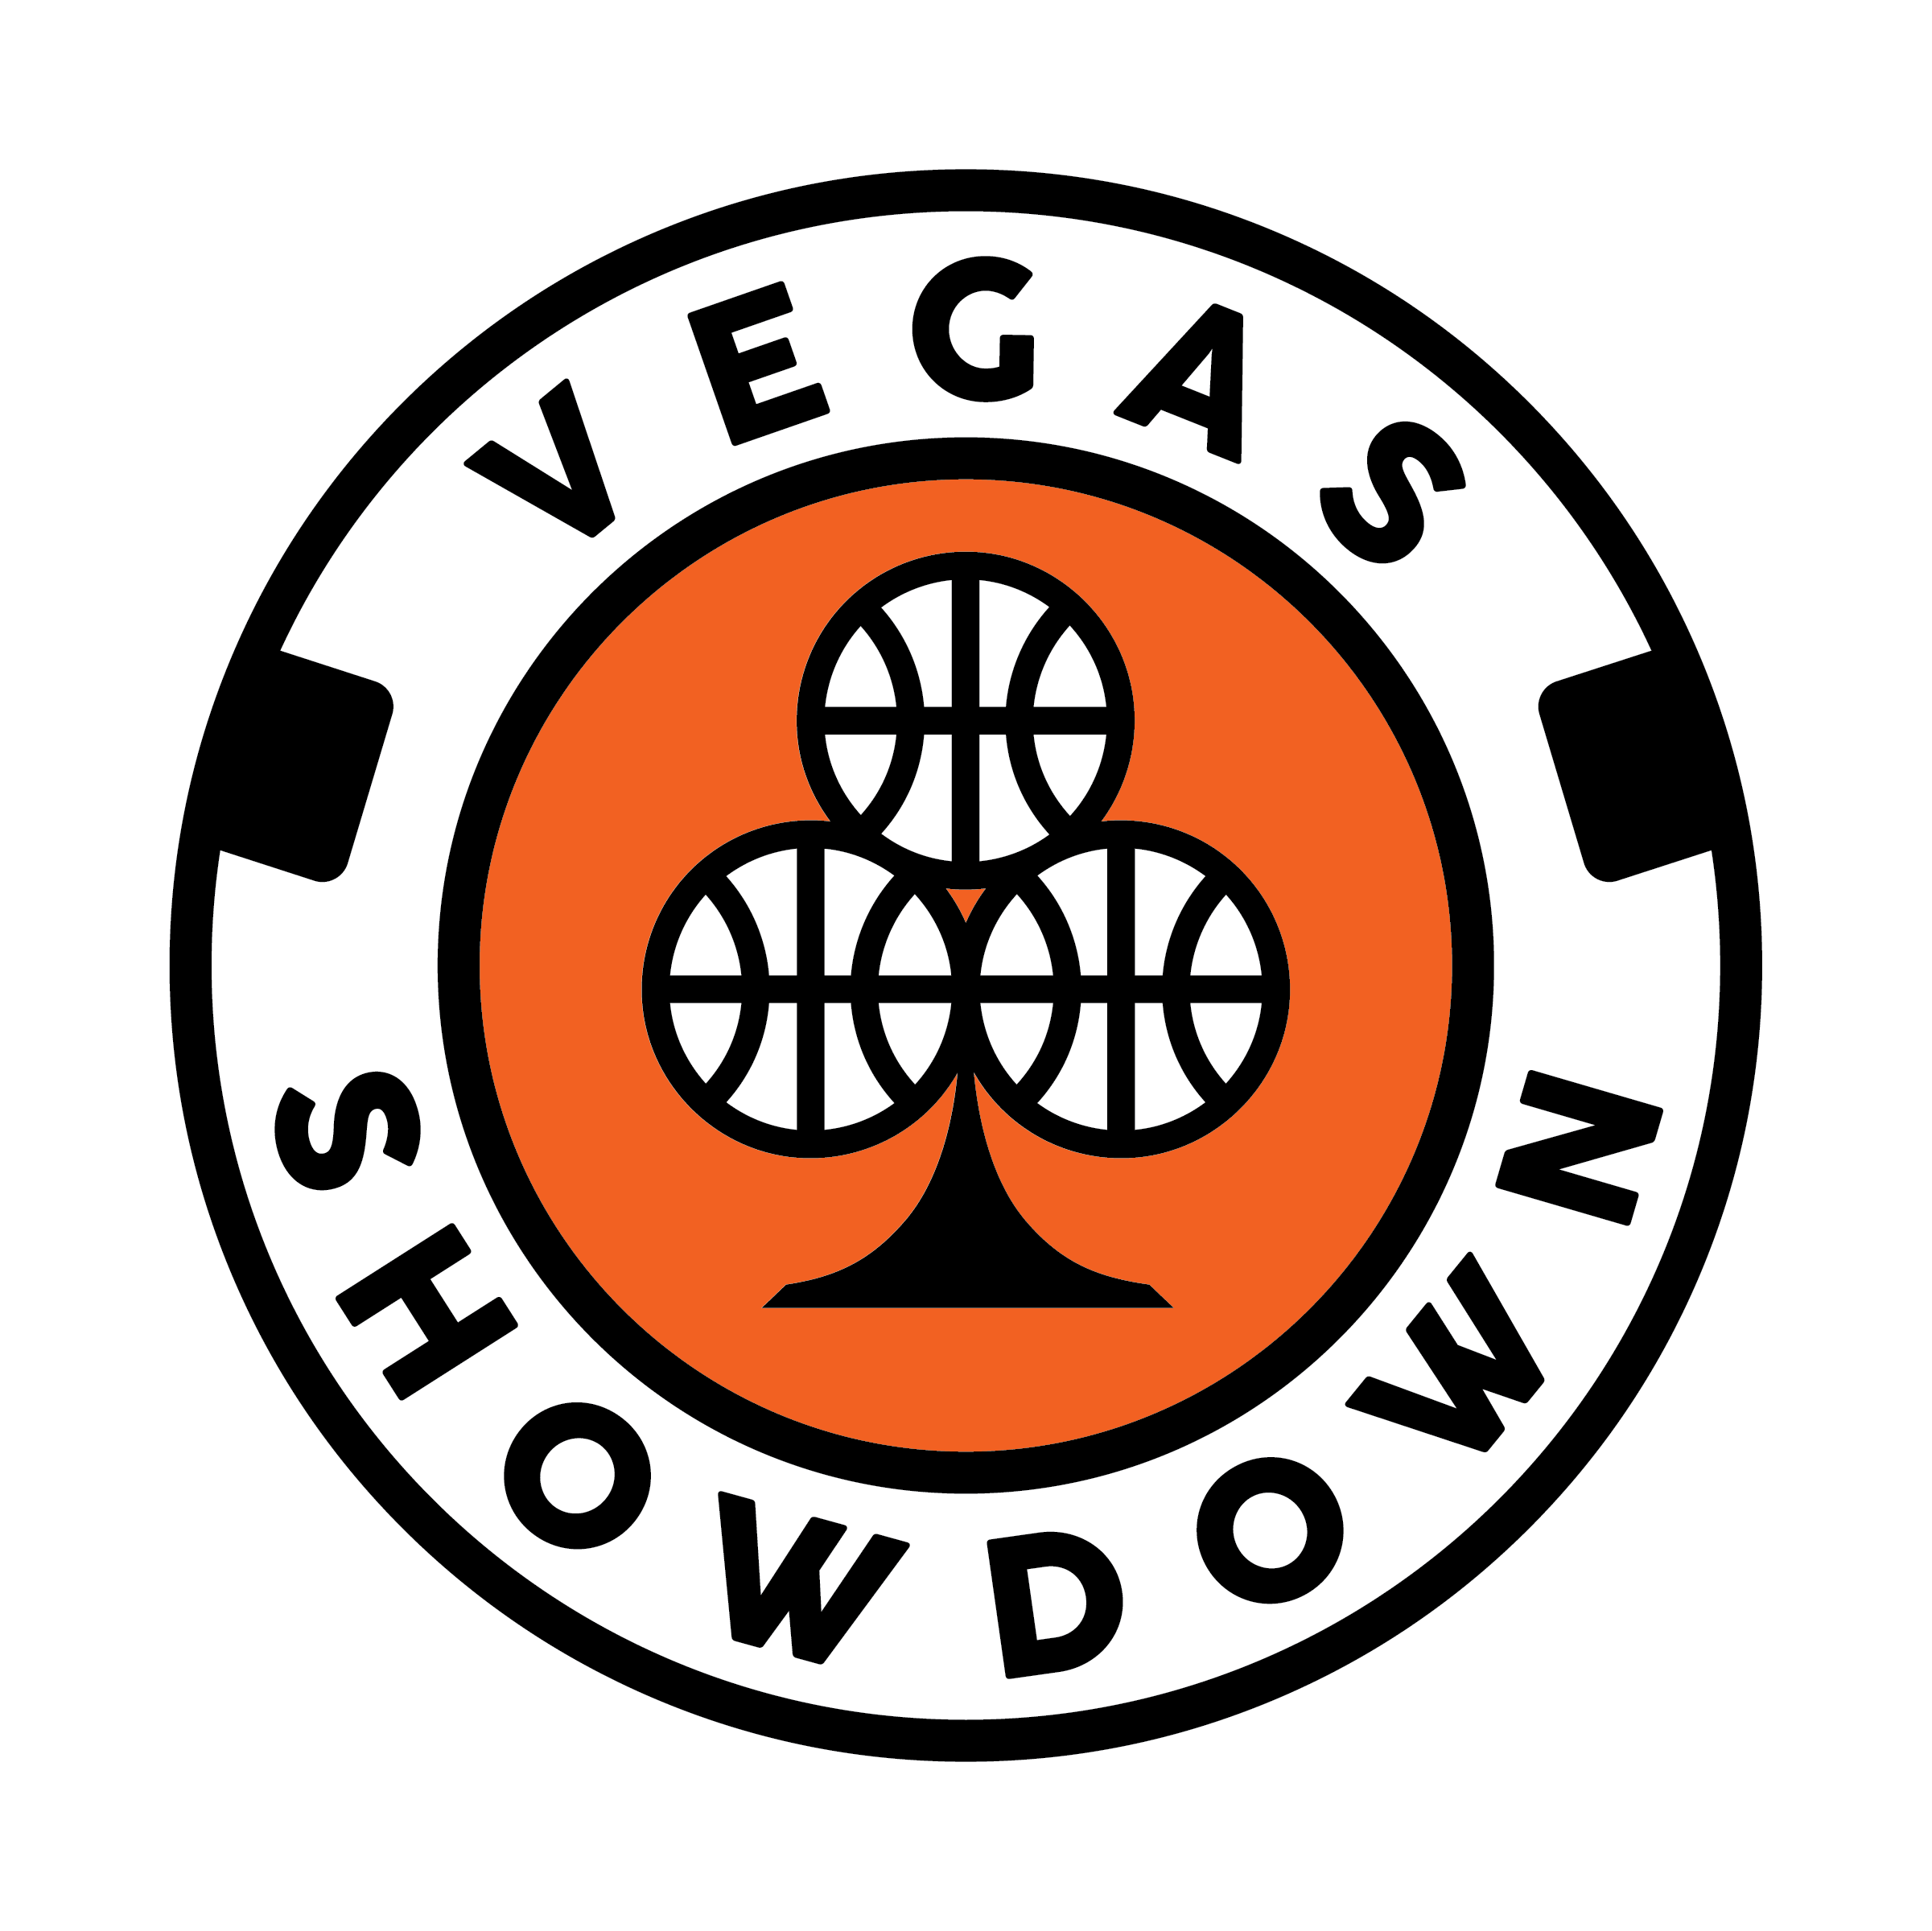 Vegas Showdown - ESPN Events